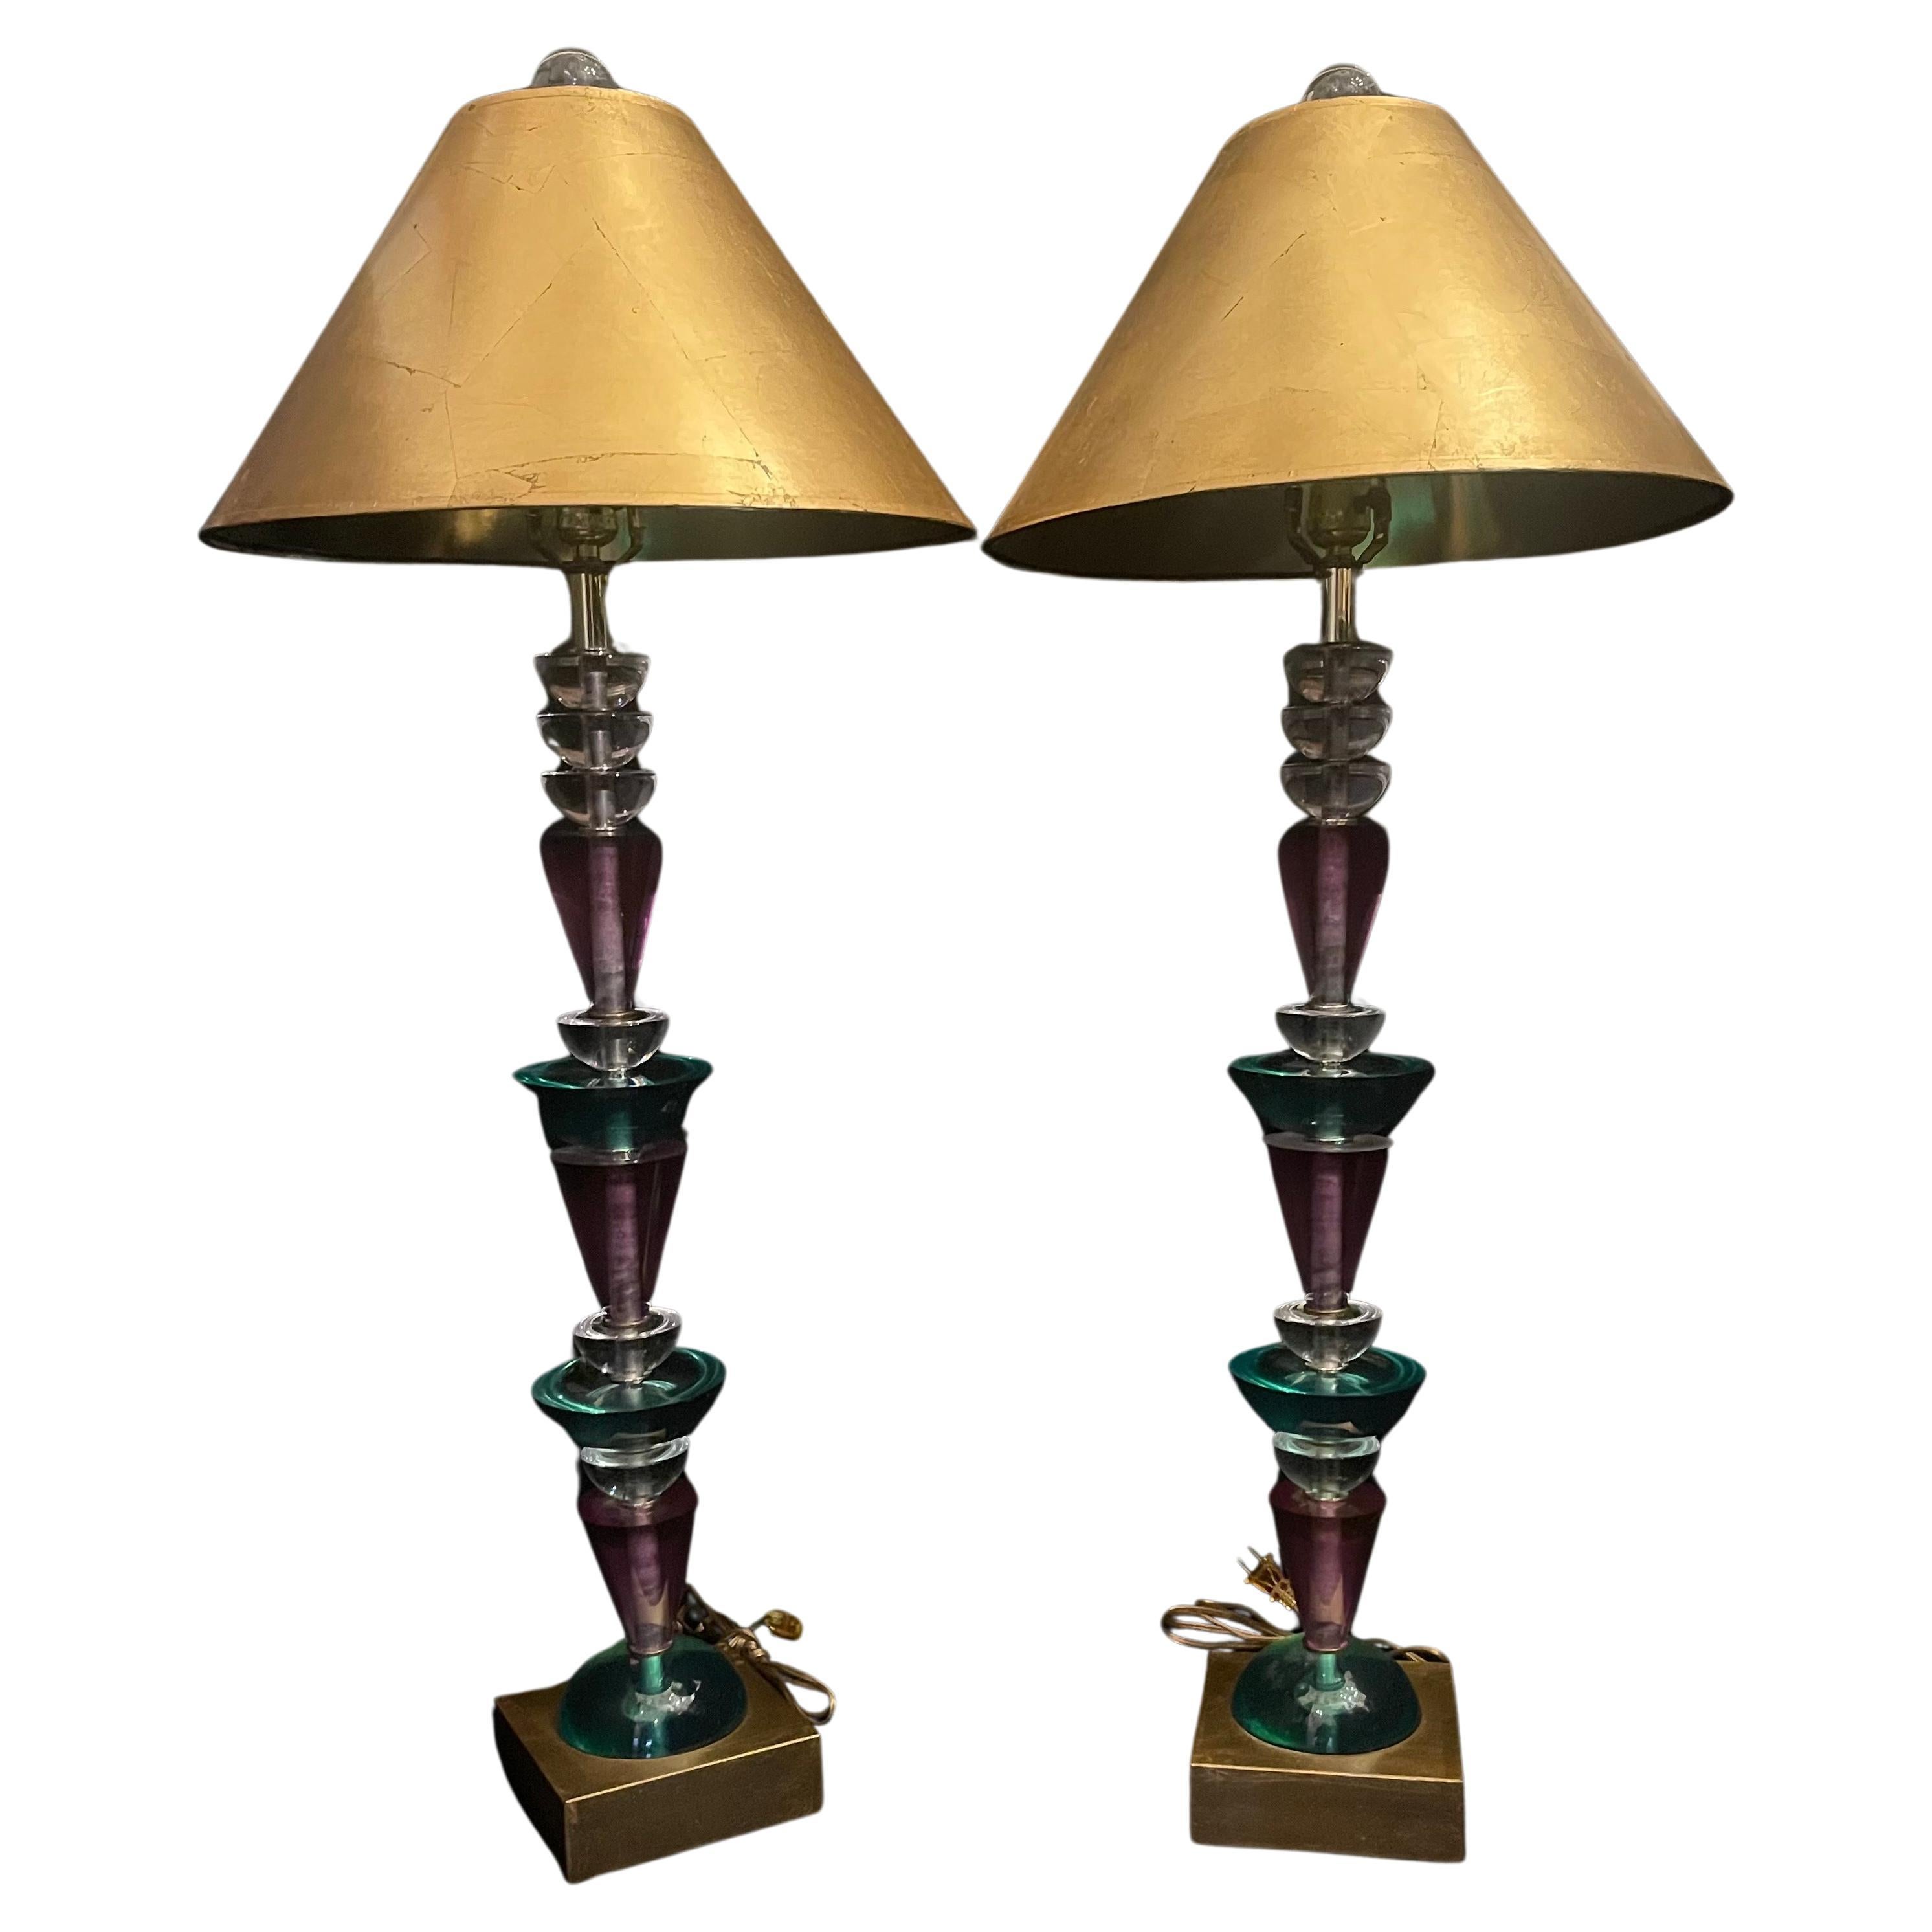 Wonderful Hivo Van Teal Designer Mid Century Modern Colored Lucite Stack Lamps